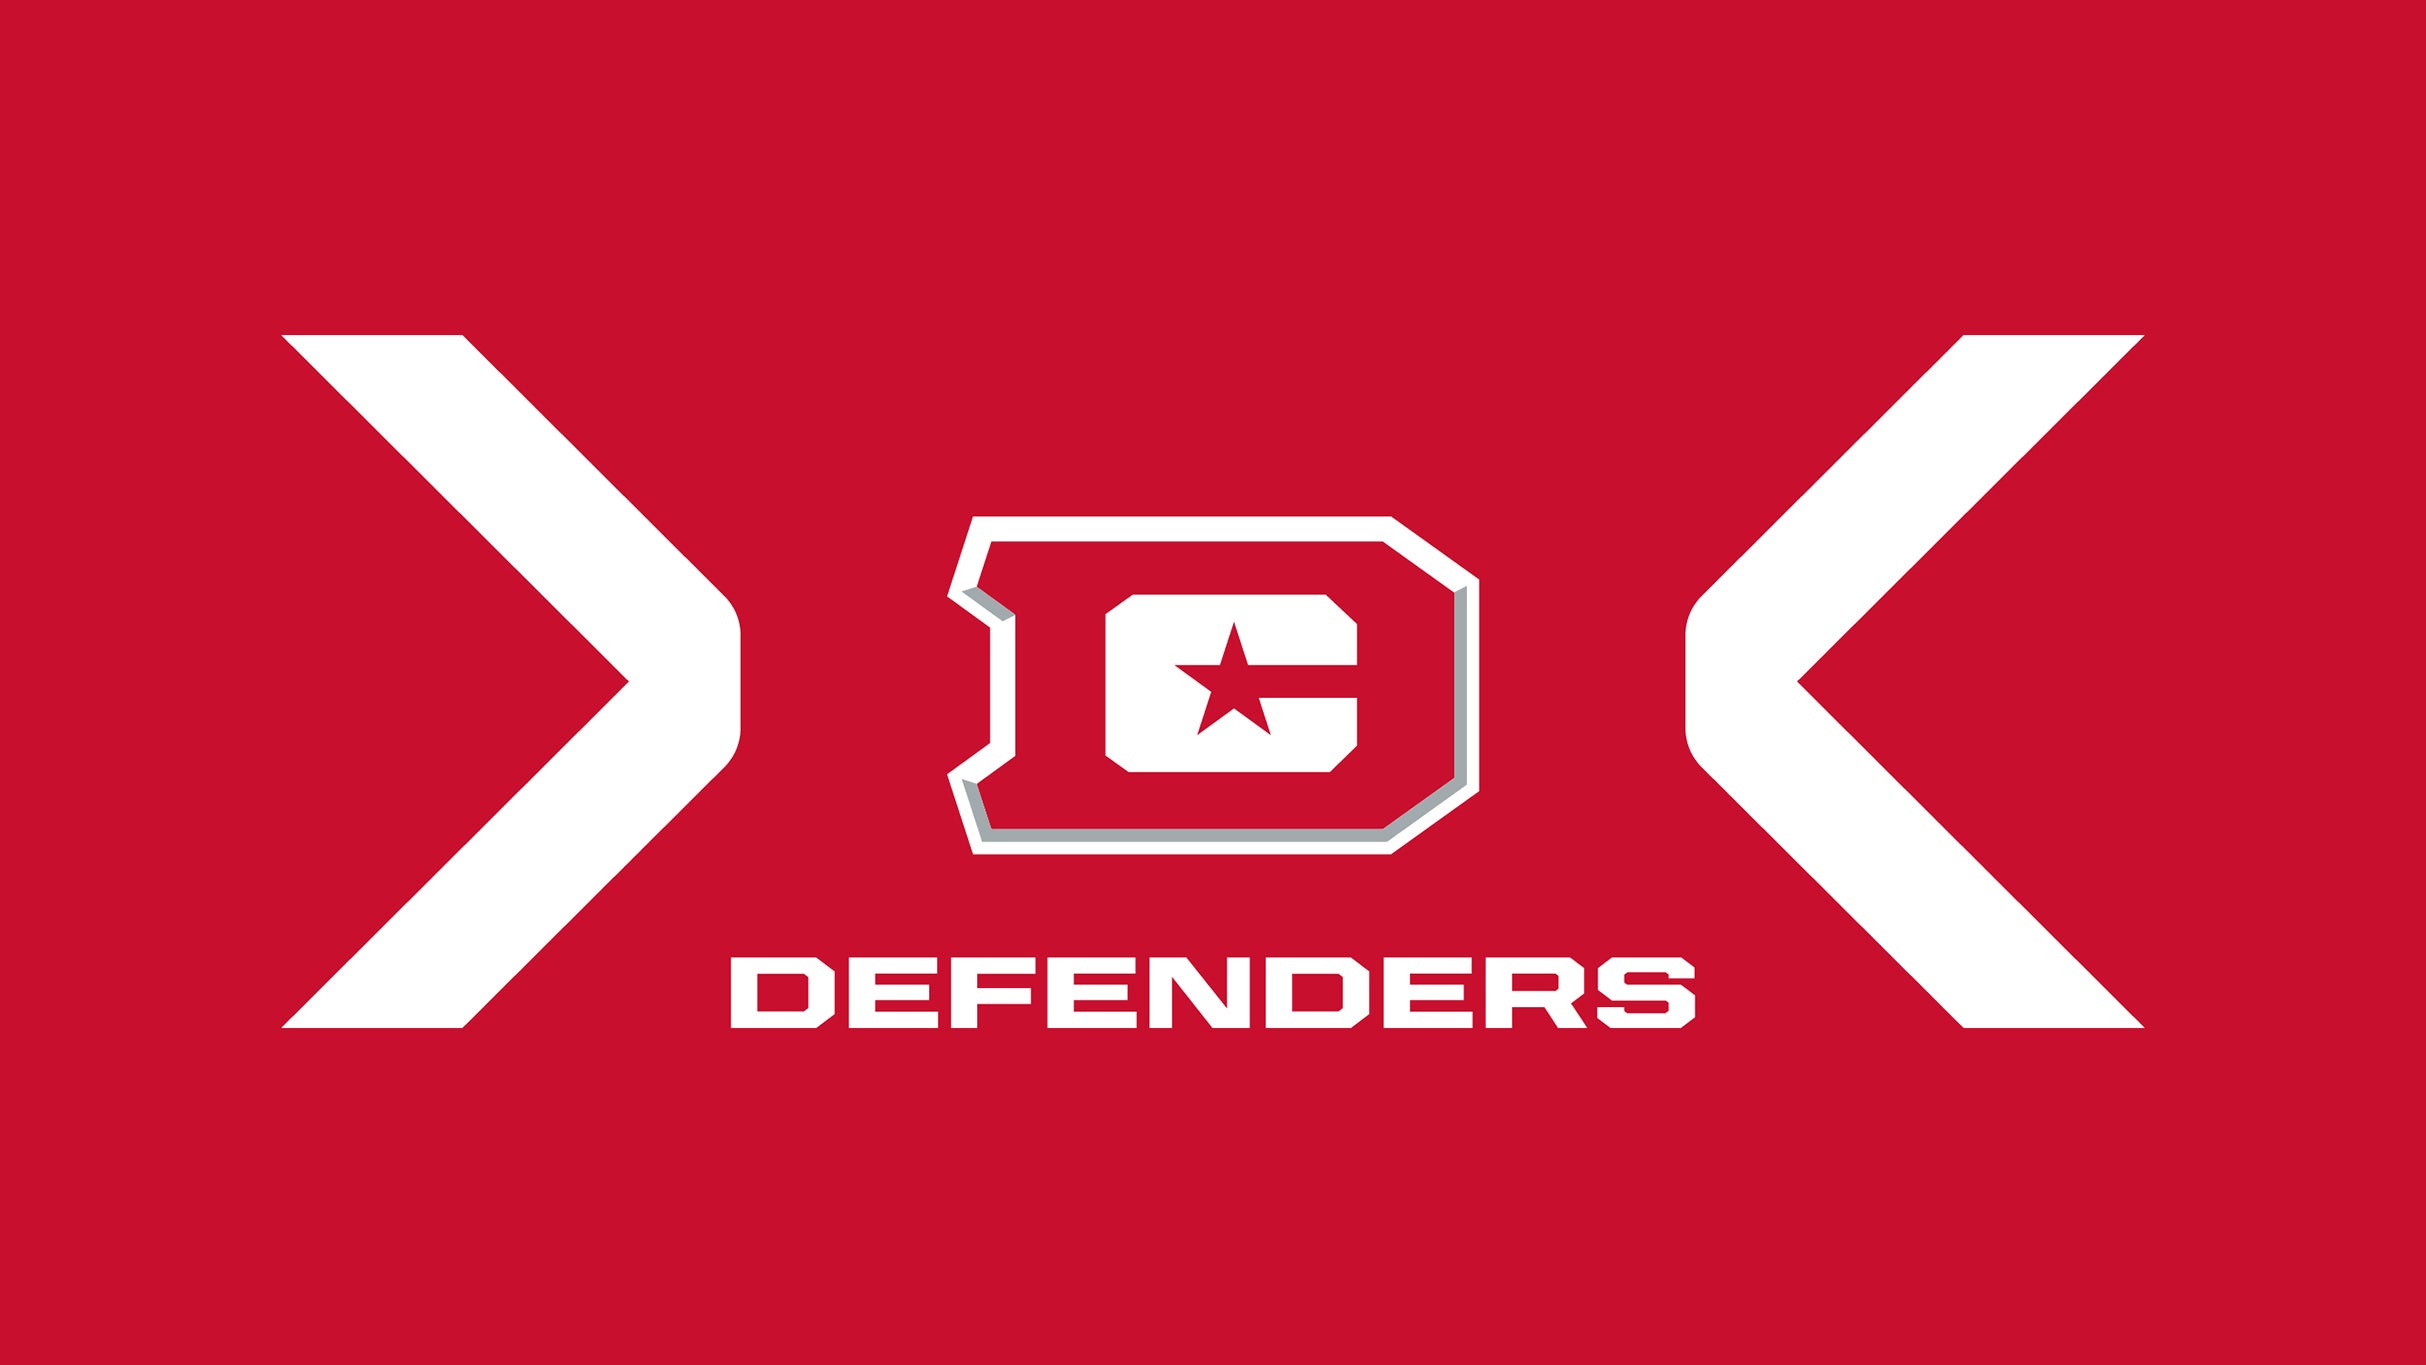 DC Defenders vs. Houston Roughnecks at Audi Field